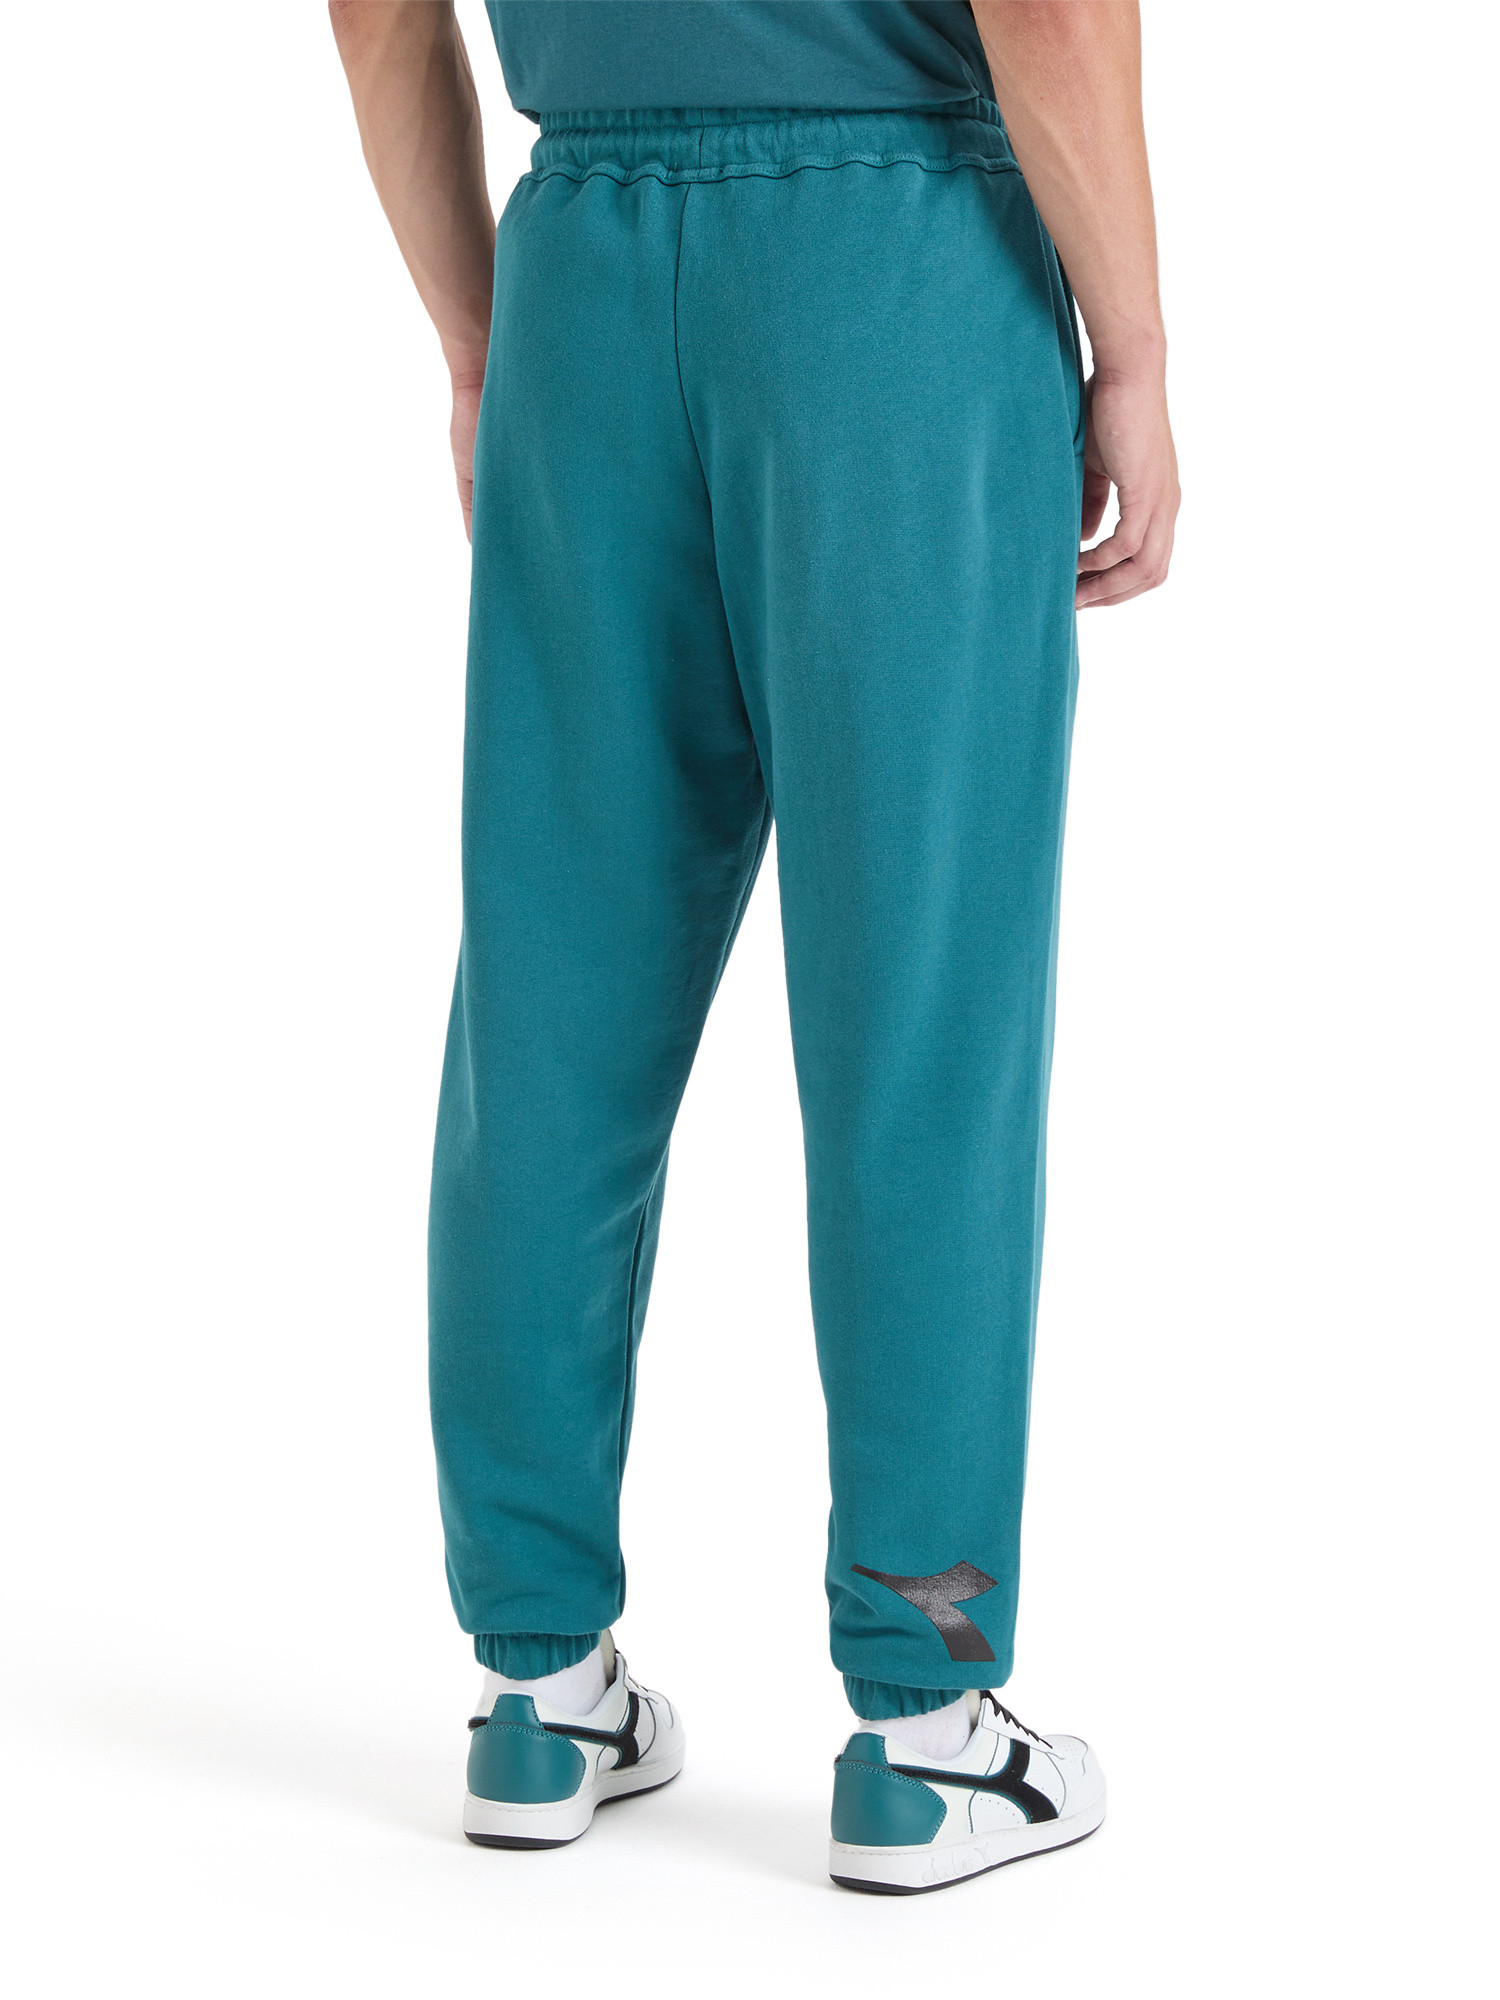 Diadora - Manifesto sports trousers with cotton print, Petroleum , large image number 5